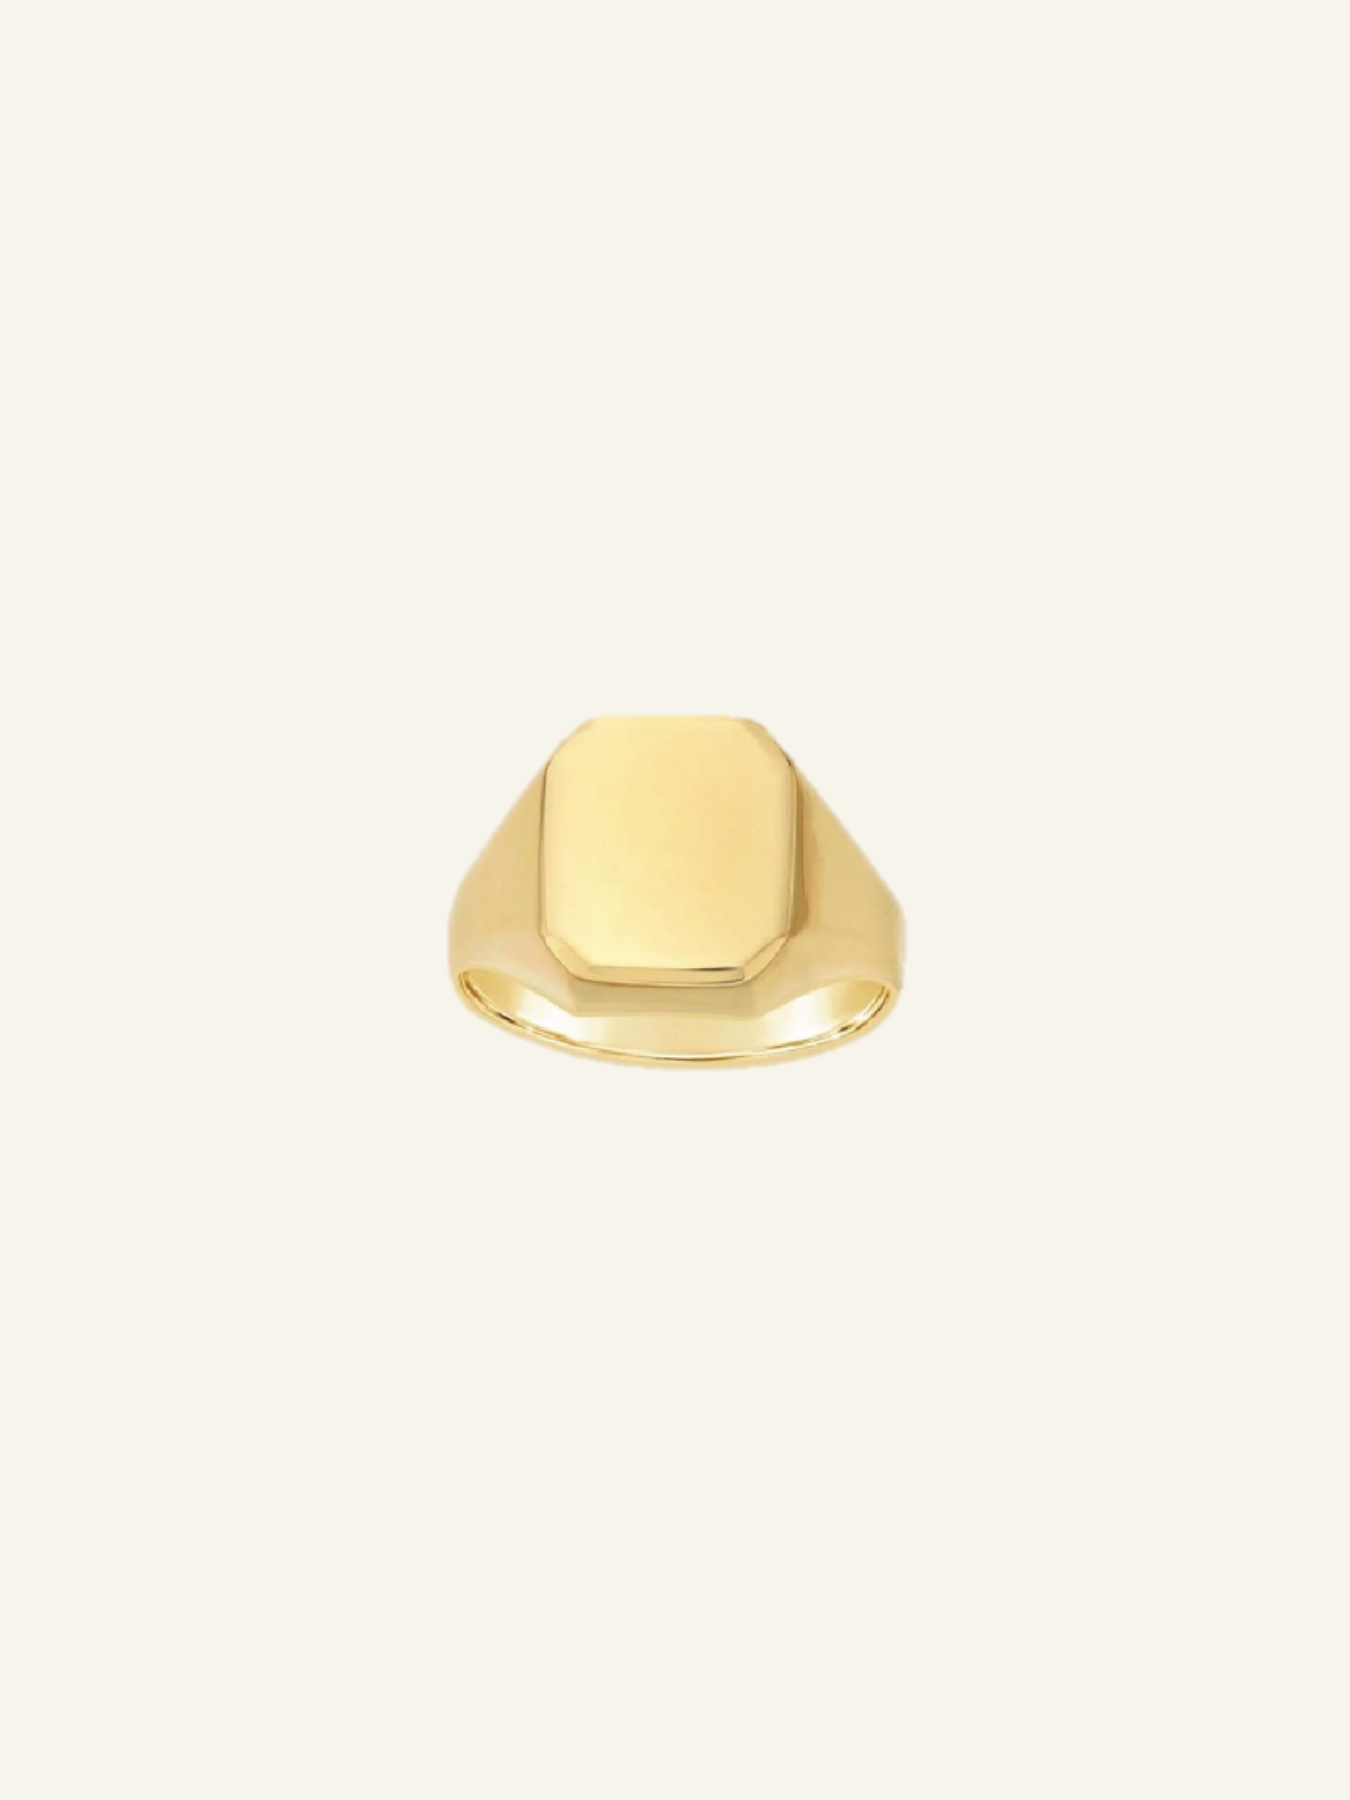 14k Solid Gold Octagon Signet Ring